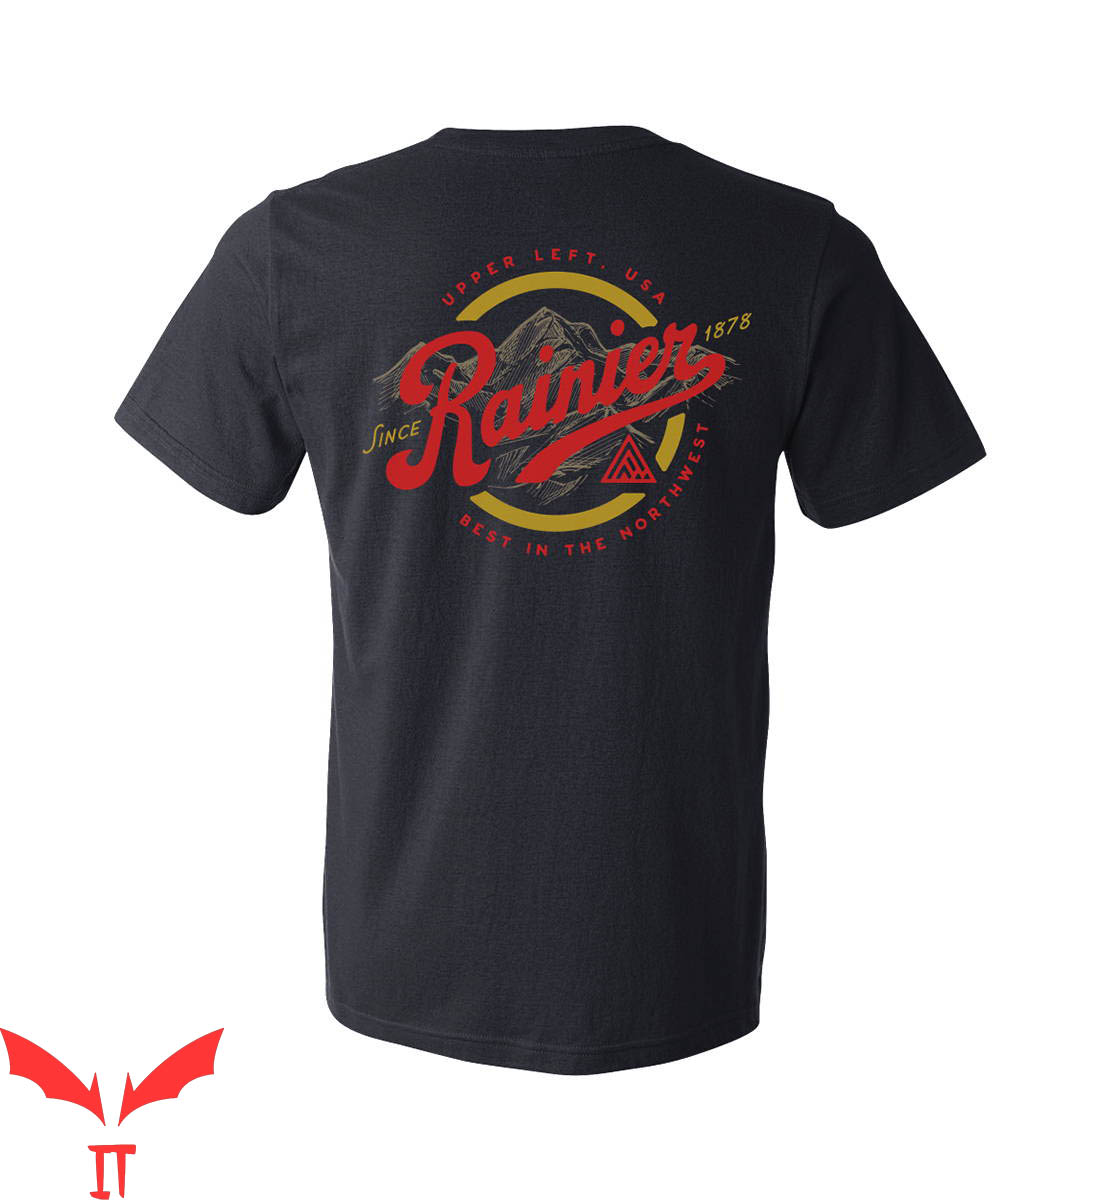 Rainier Beer T-Shirt Since 1878 Upper Left USA Northwest